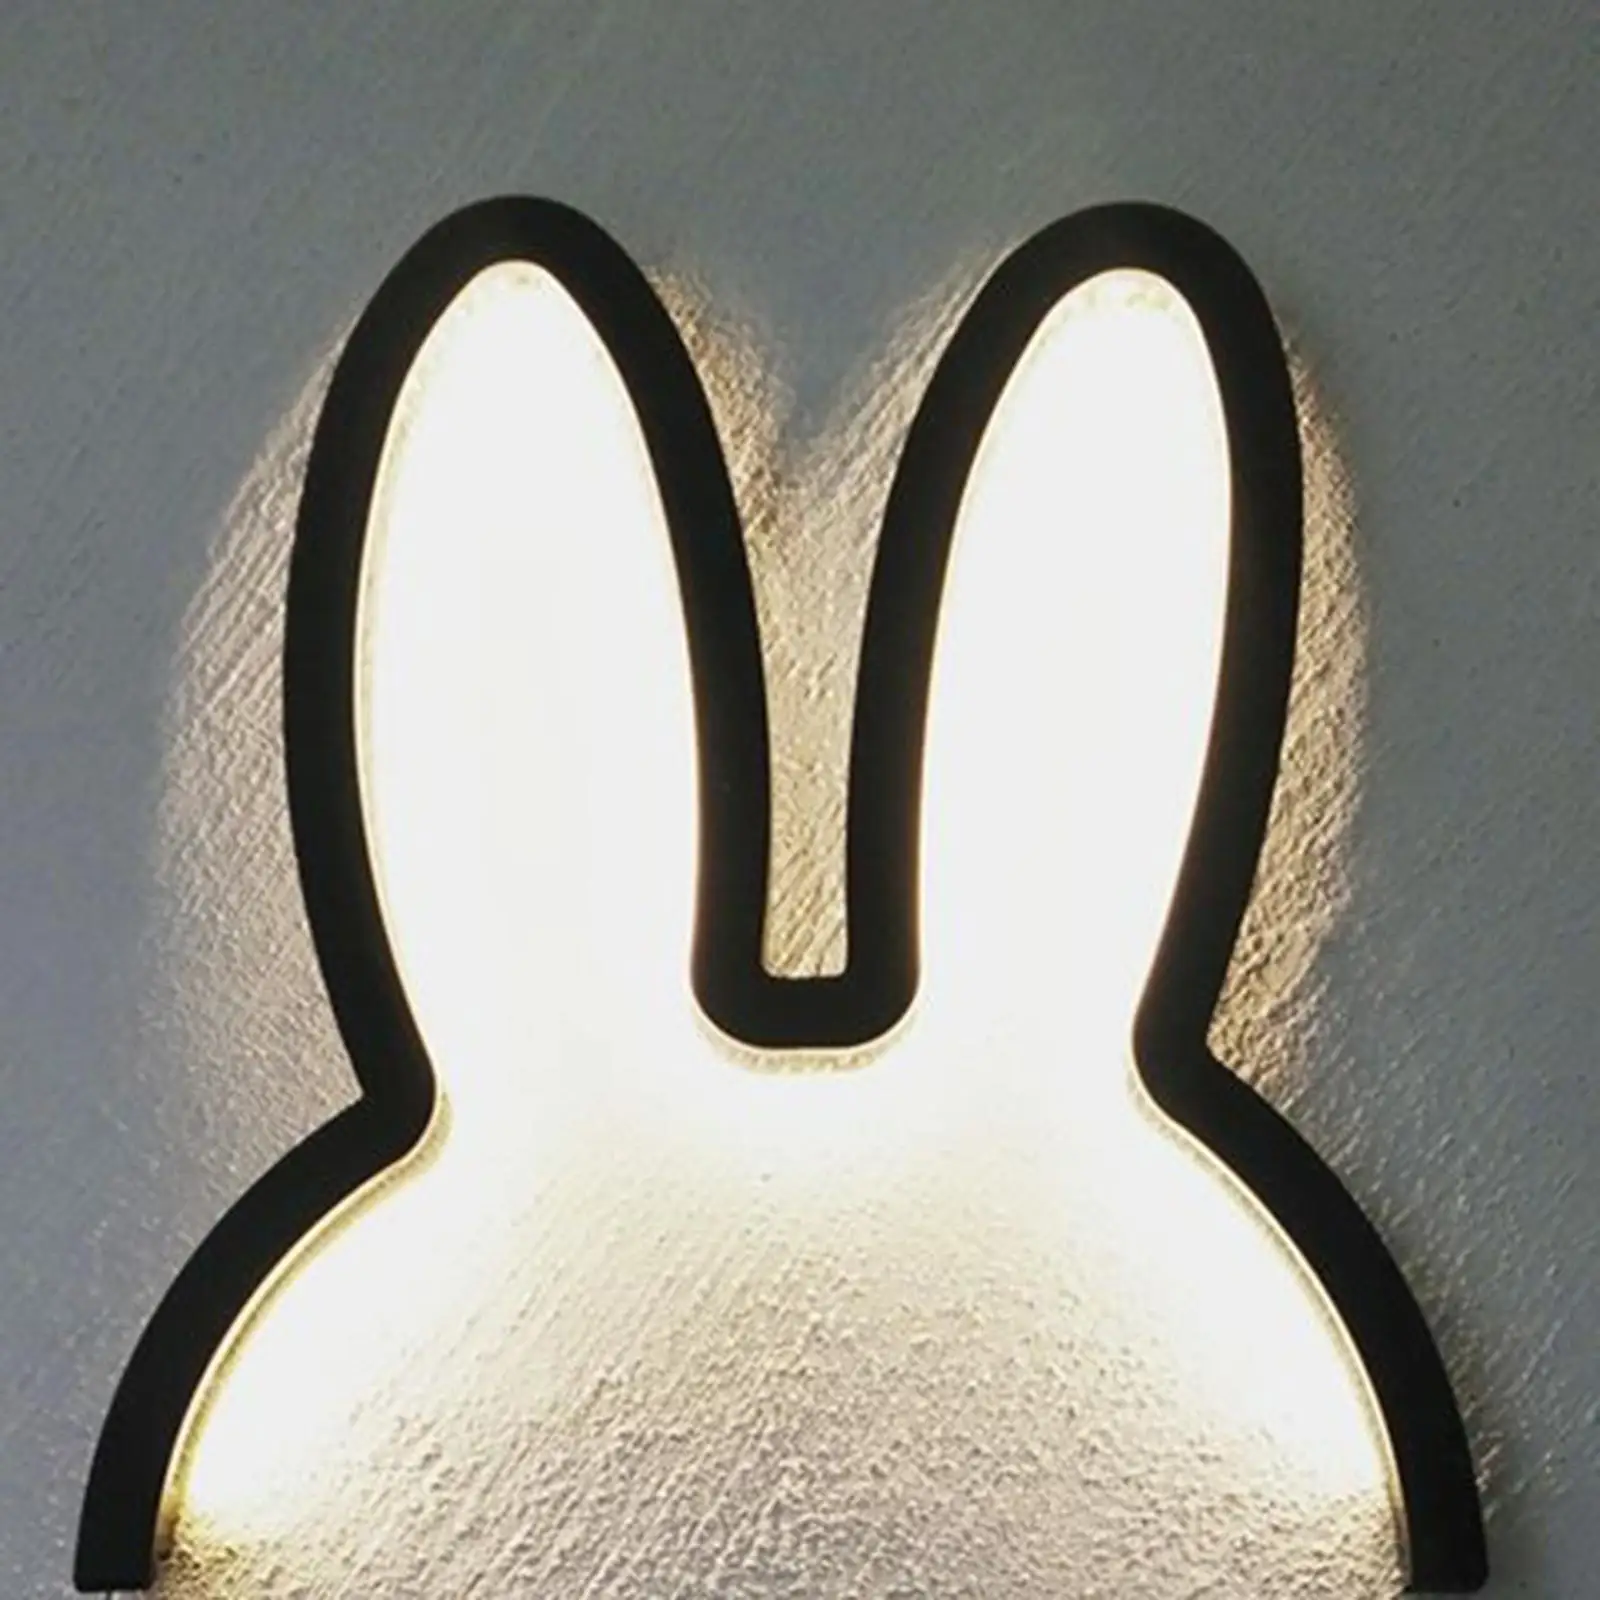 Cute Rabbit Night Light USB Dimmable Light Bar Warm Light LED Bunny Lamp for NightStand Tabletop Bedroom Decor Xmas Gift